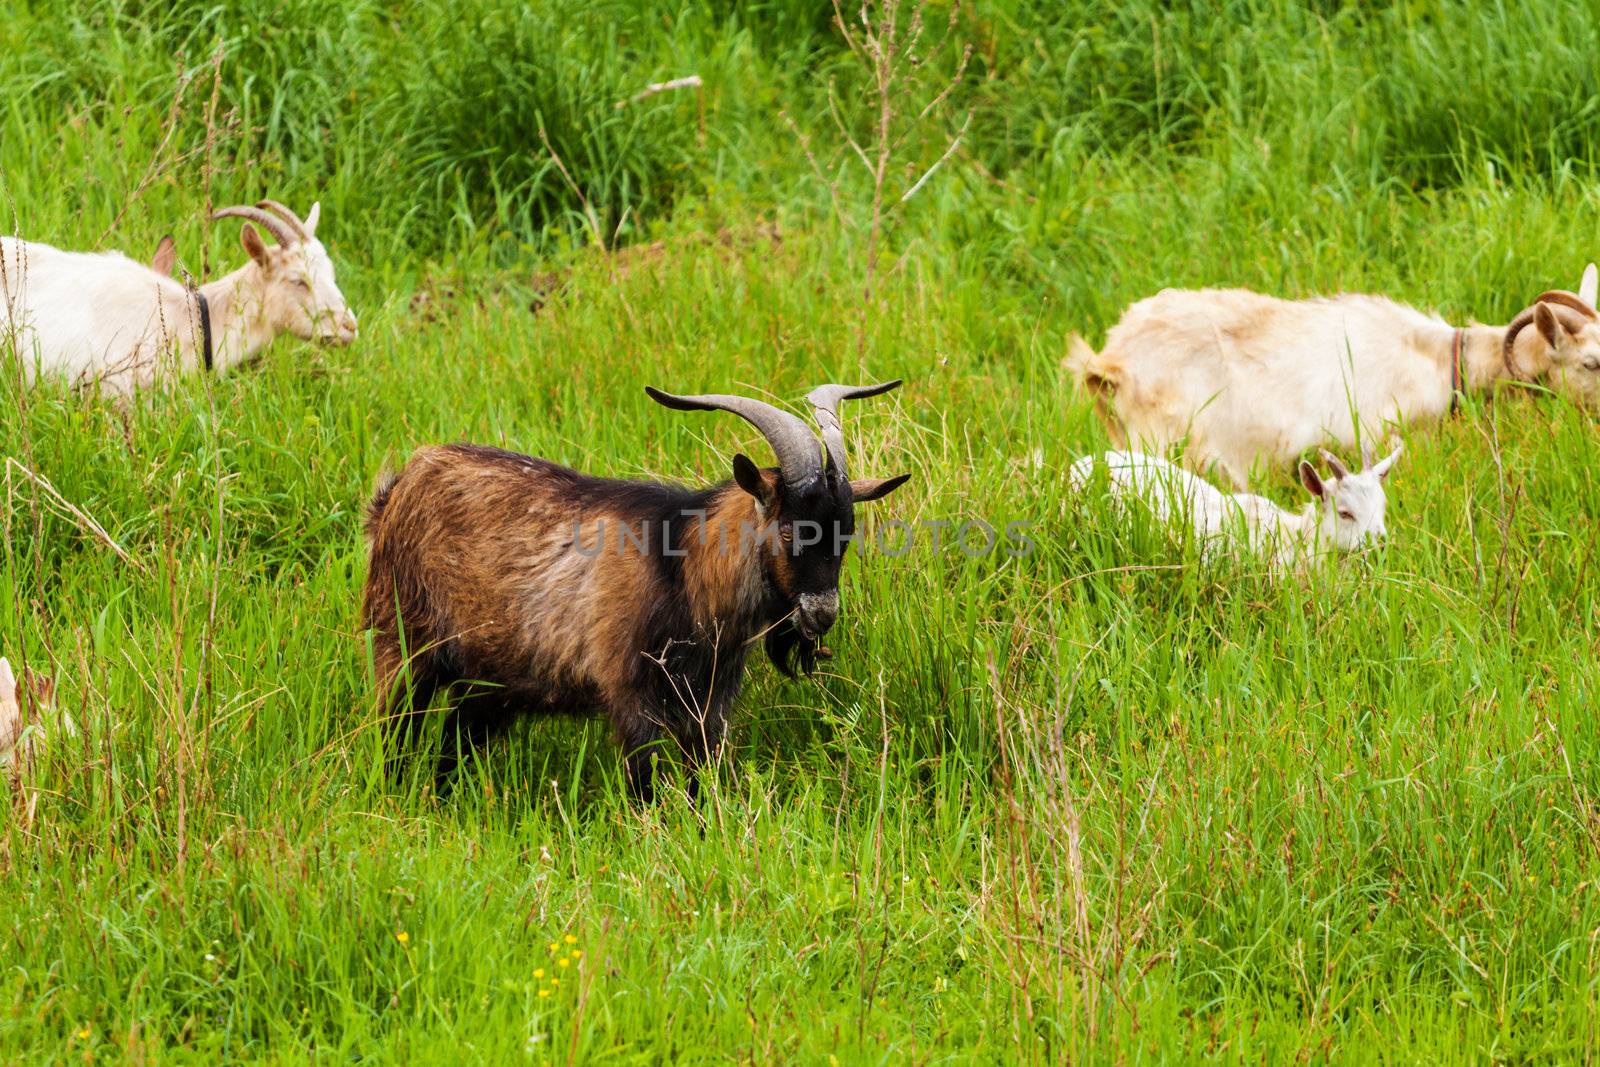 Goats in high grass by Lamarinx